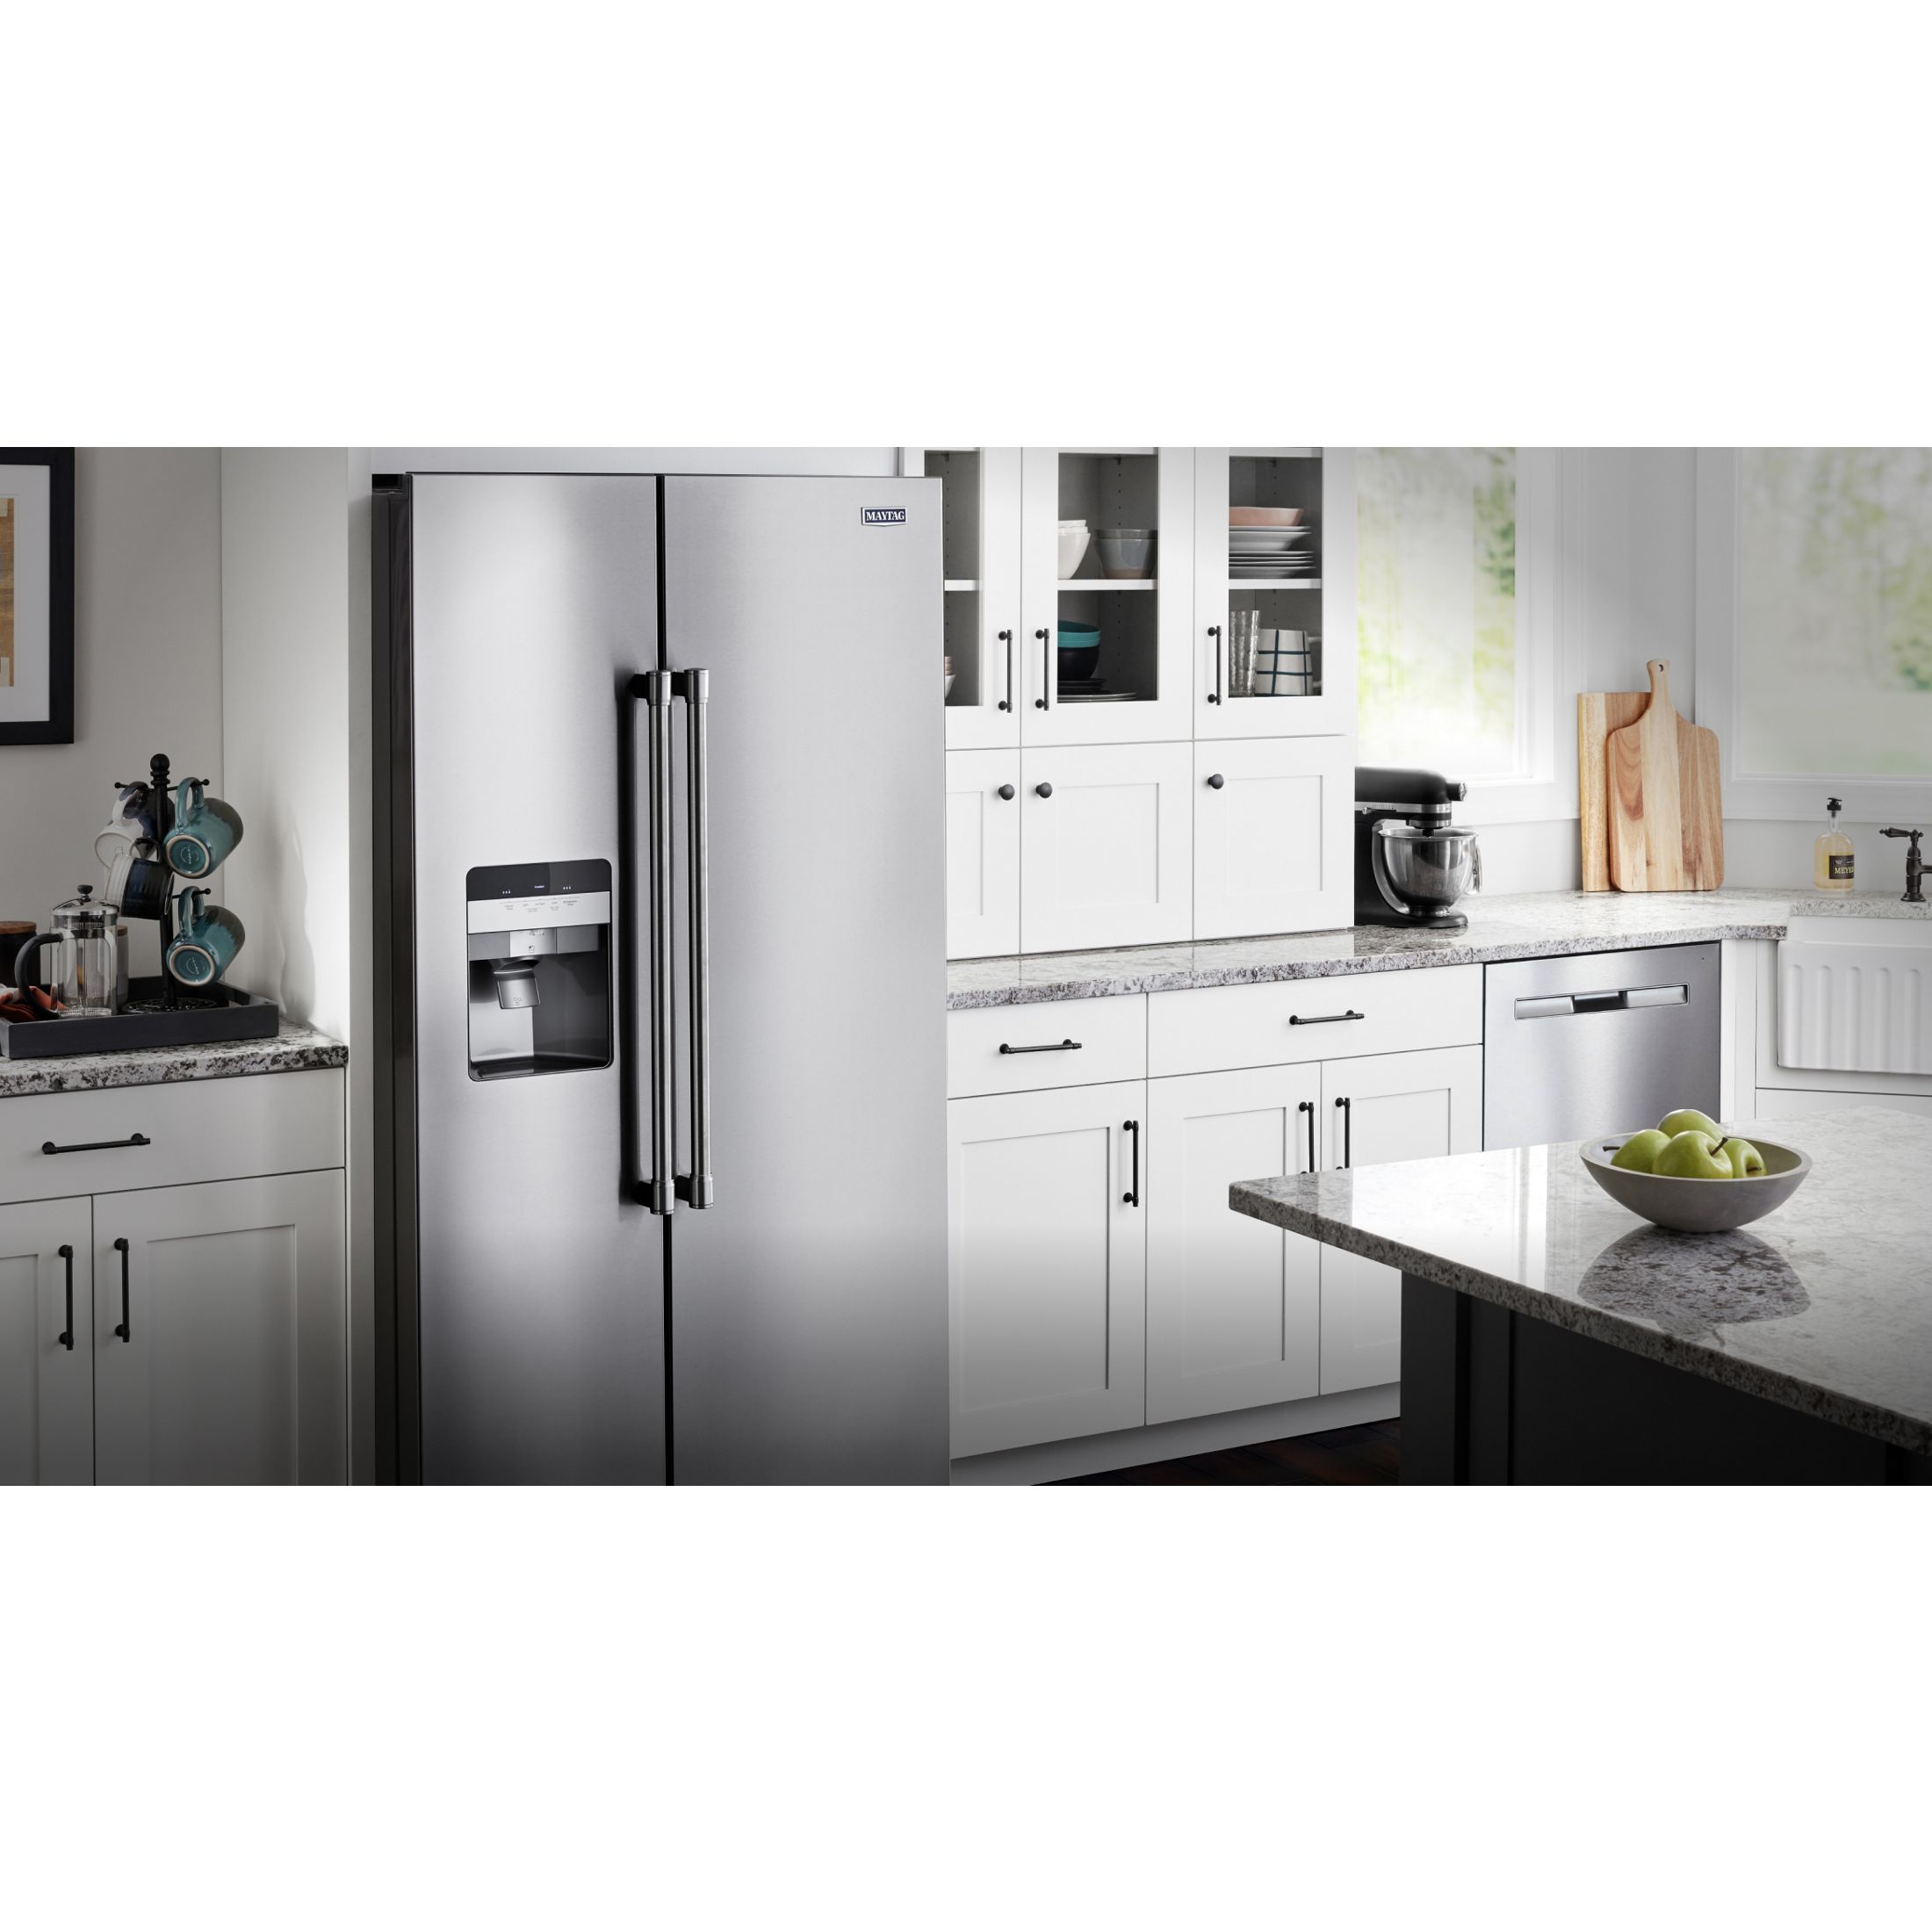 Explore Dependable Kitchen Appliances | Maytag